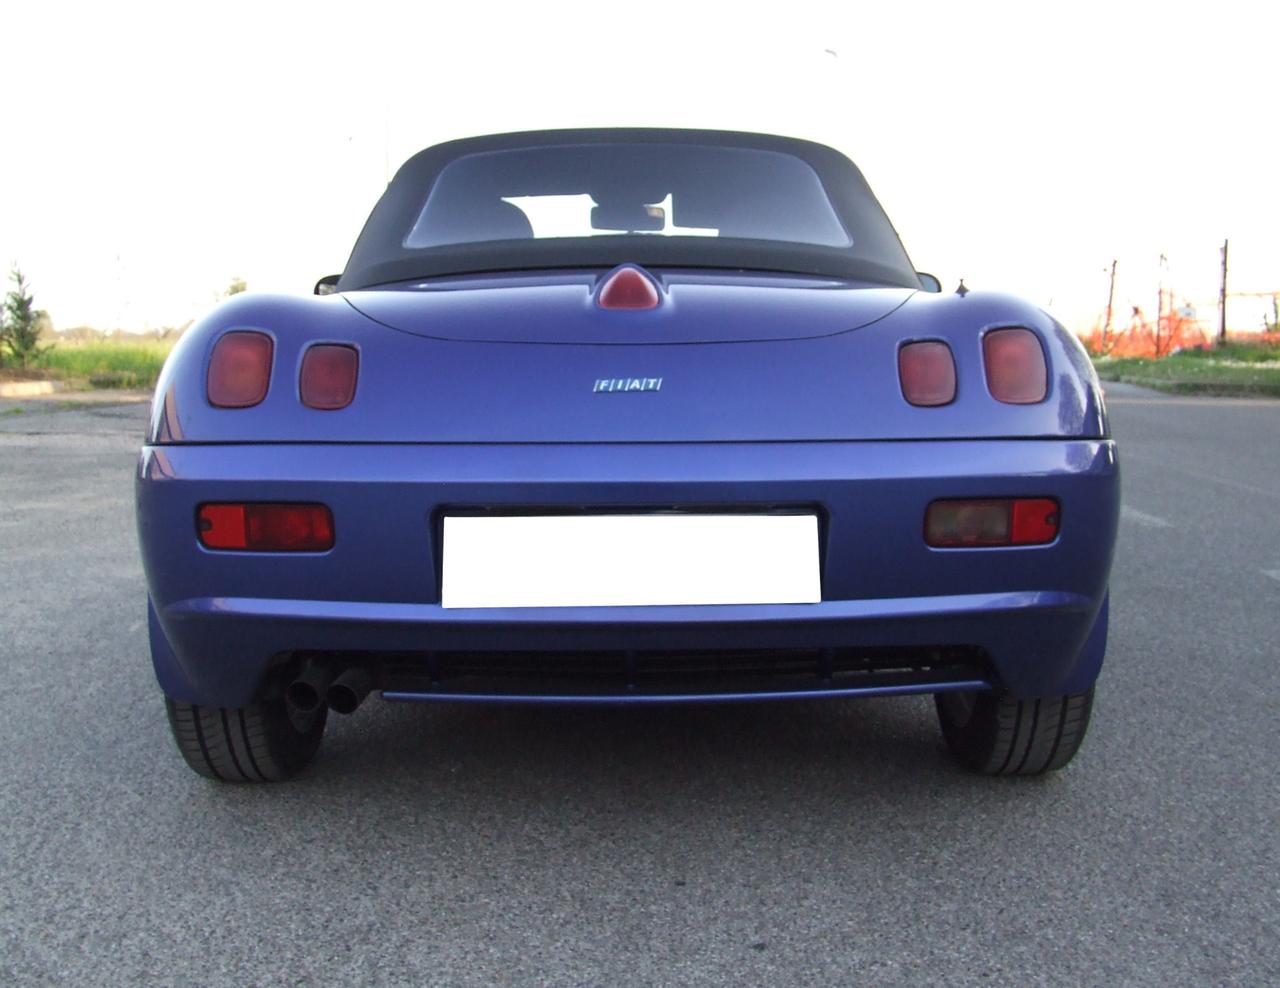 Fiat Barchetta 1.8 16V - anno 2002